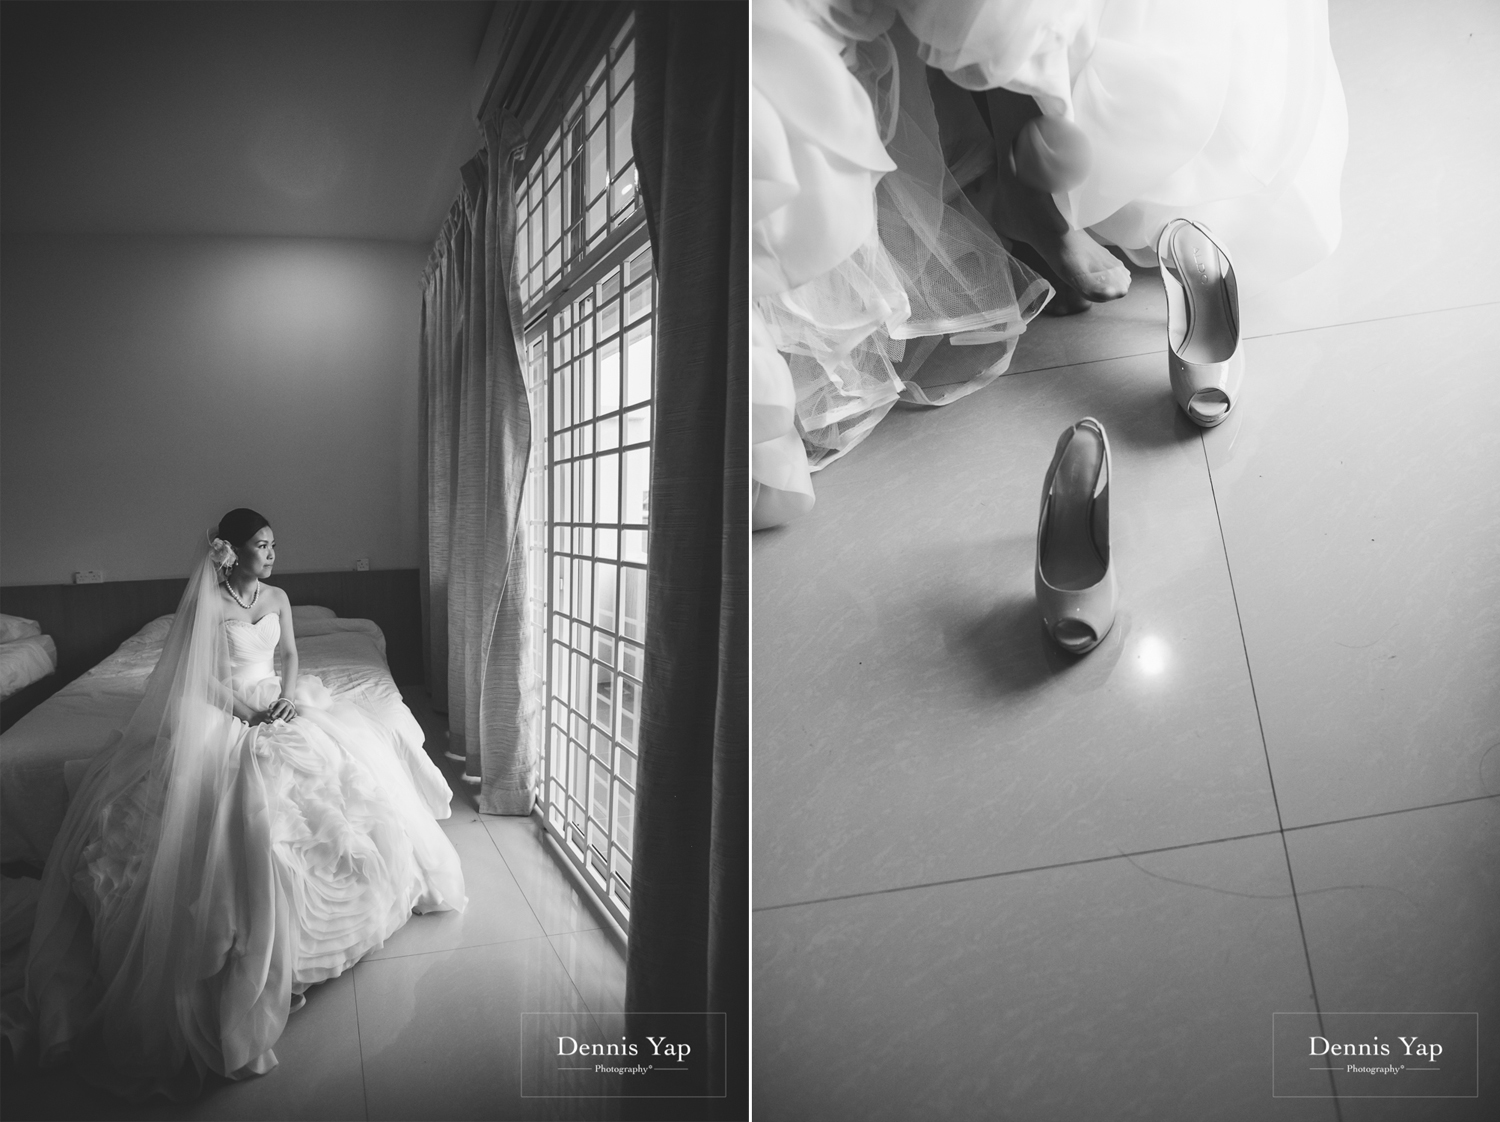 hao run khai sing wedding day family dennis yap photography-2.jpg